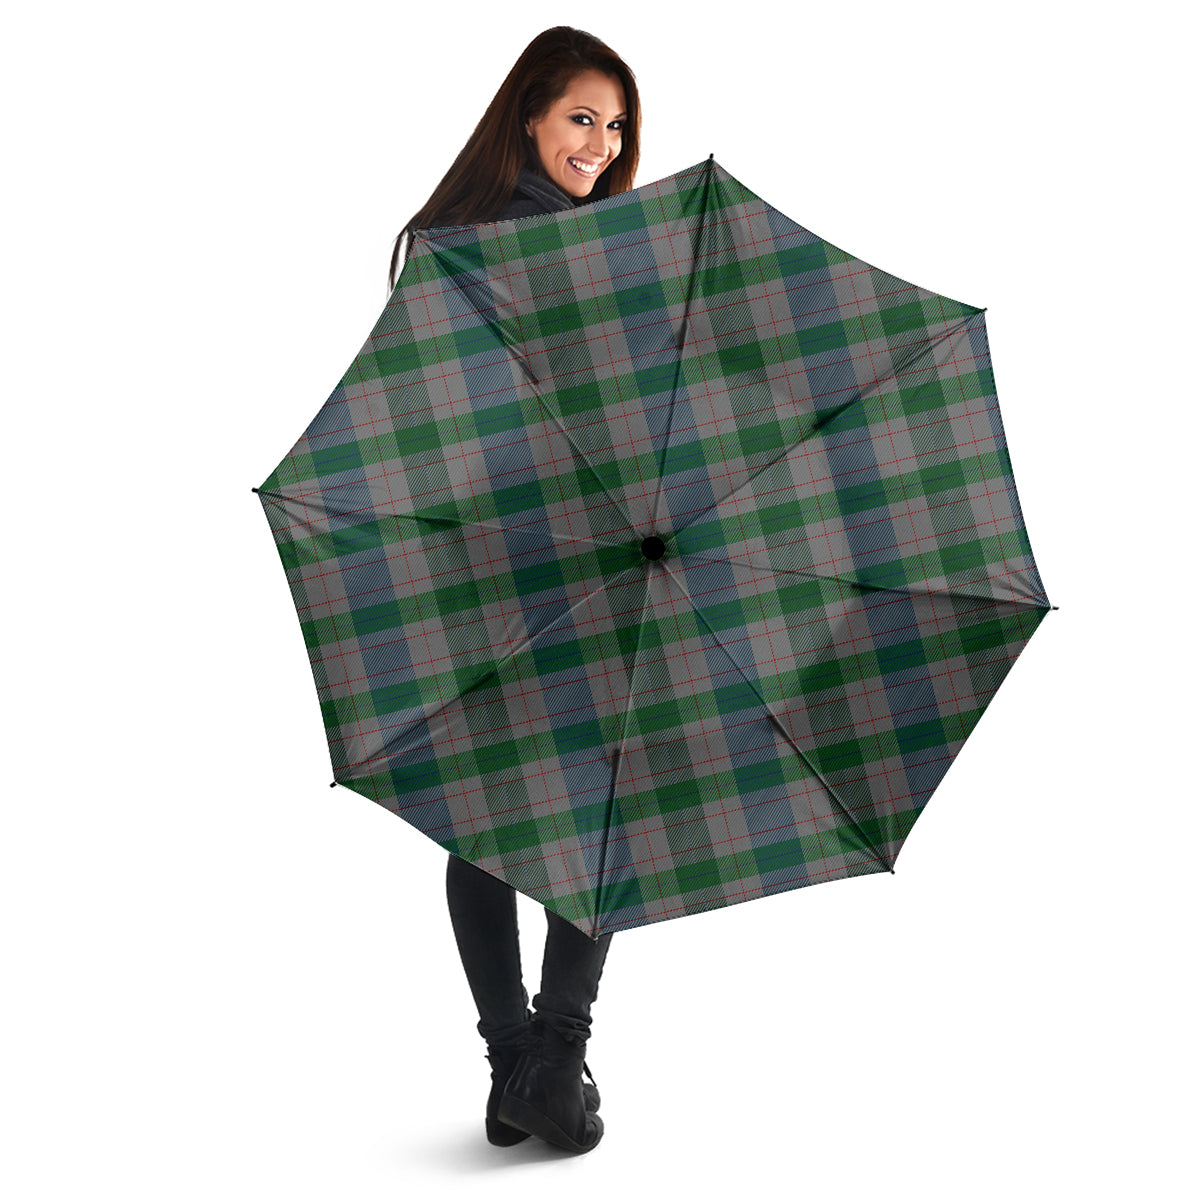 Lloyd of Wales Tartan Umbrella - Tartanvibesclothing